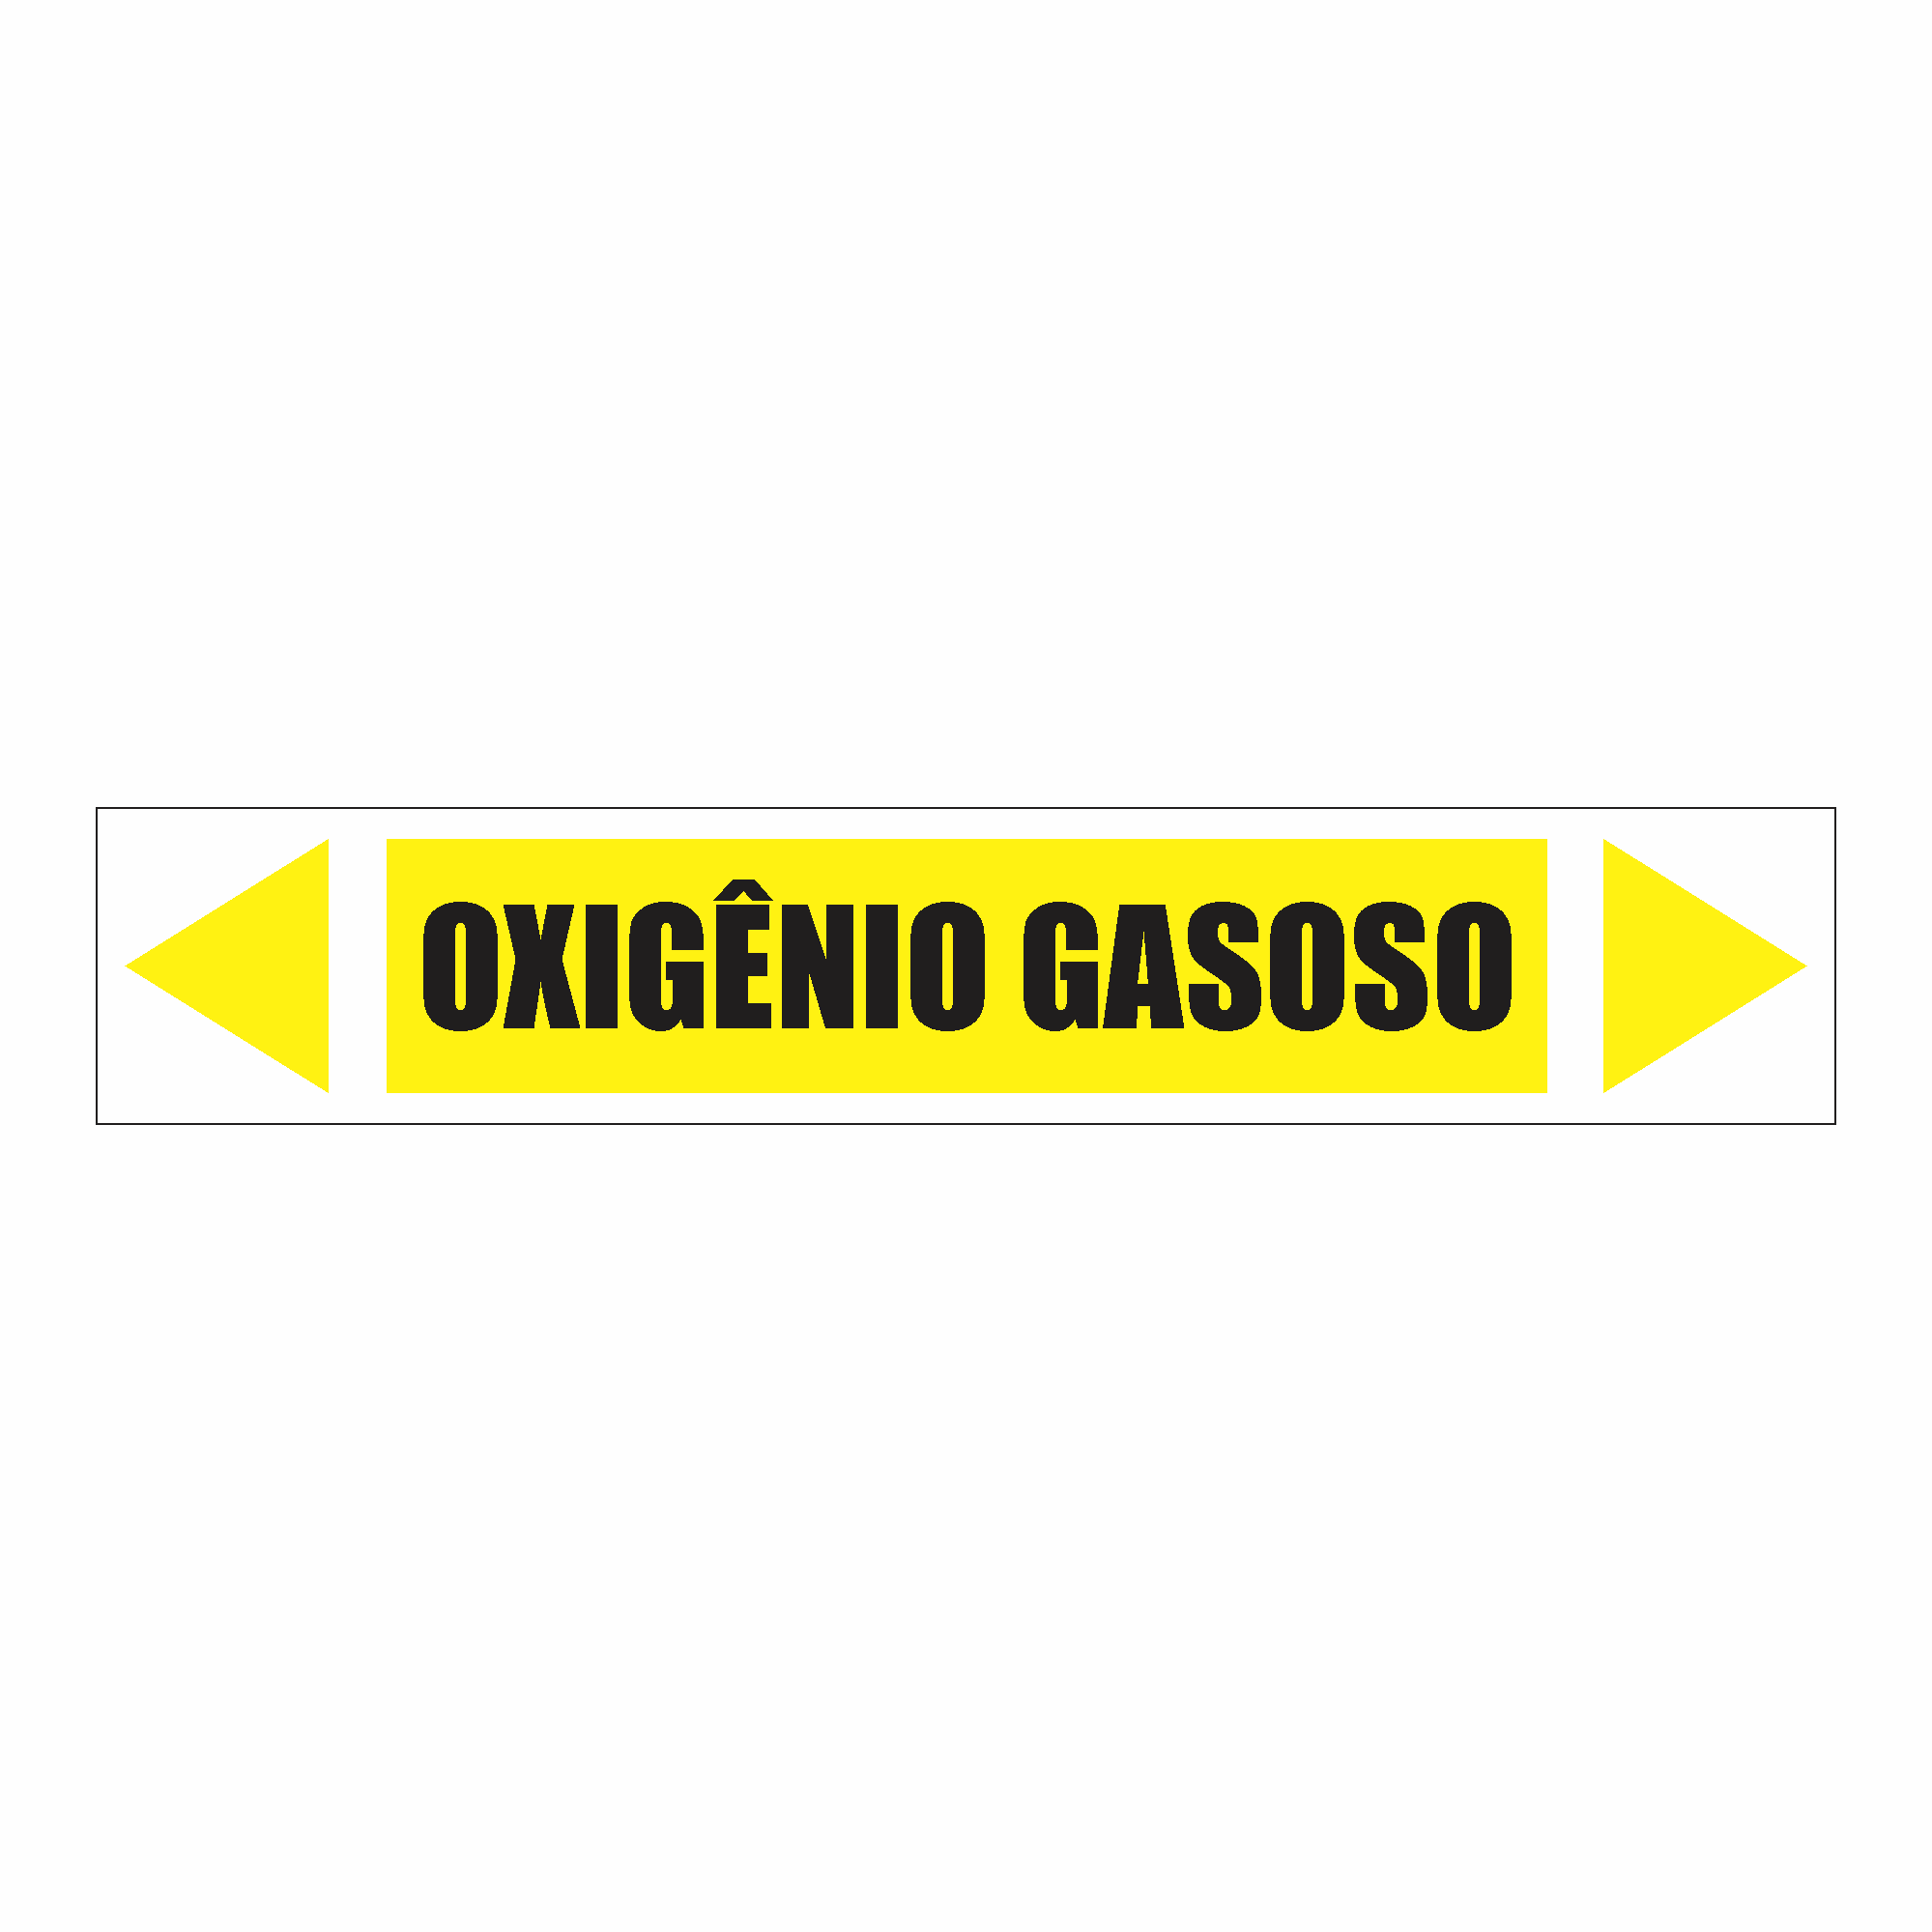 IDT 096 - Oxigênio Gasoso